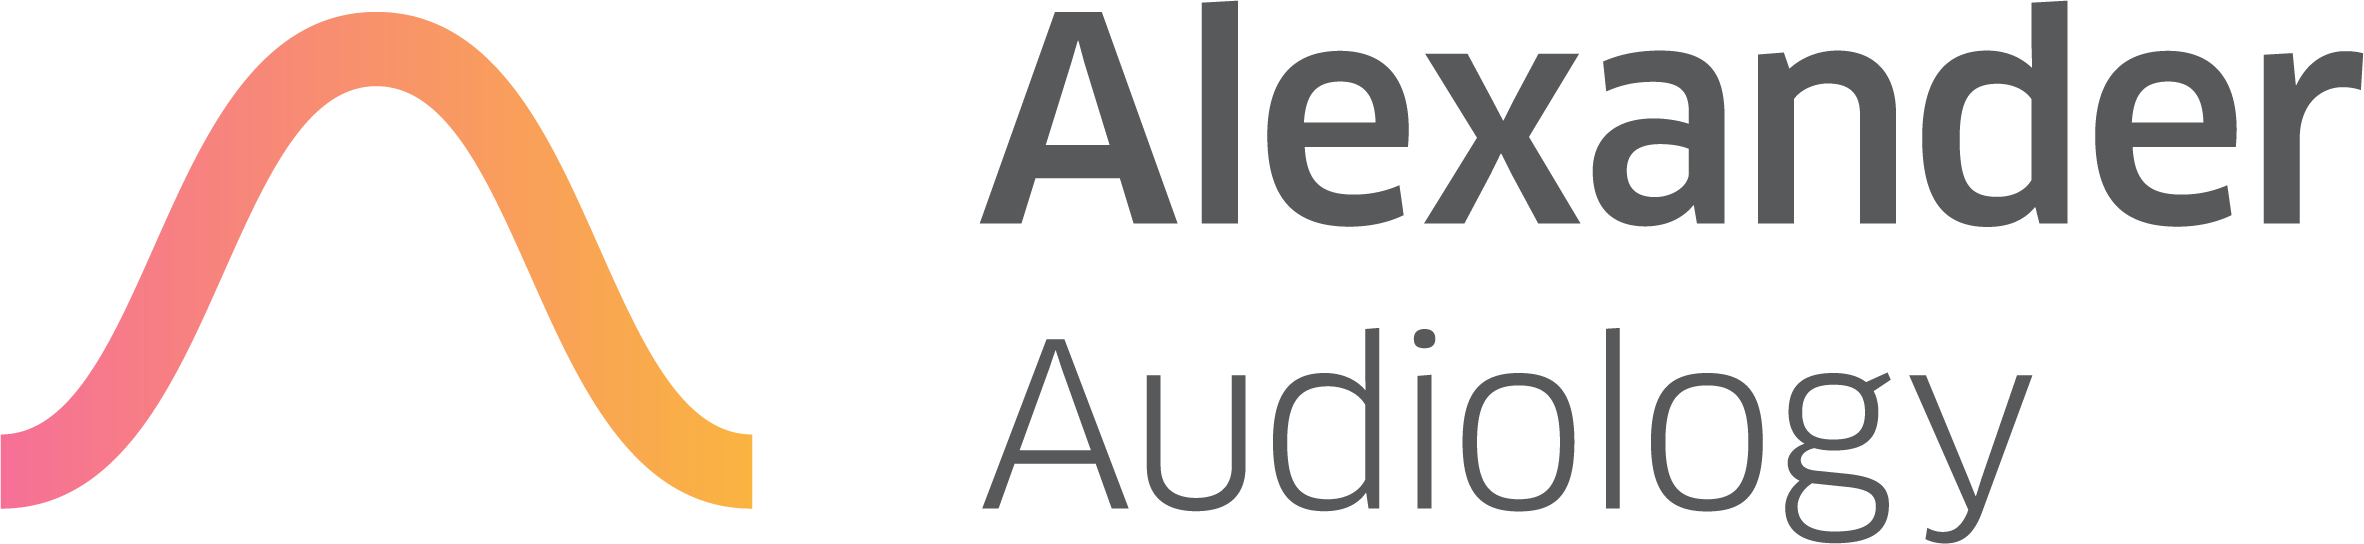 Audiologist's Choice Ear Wax Removal Kit